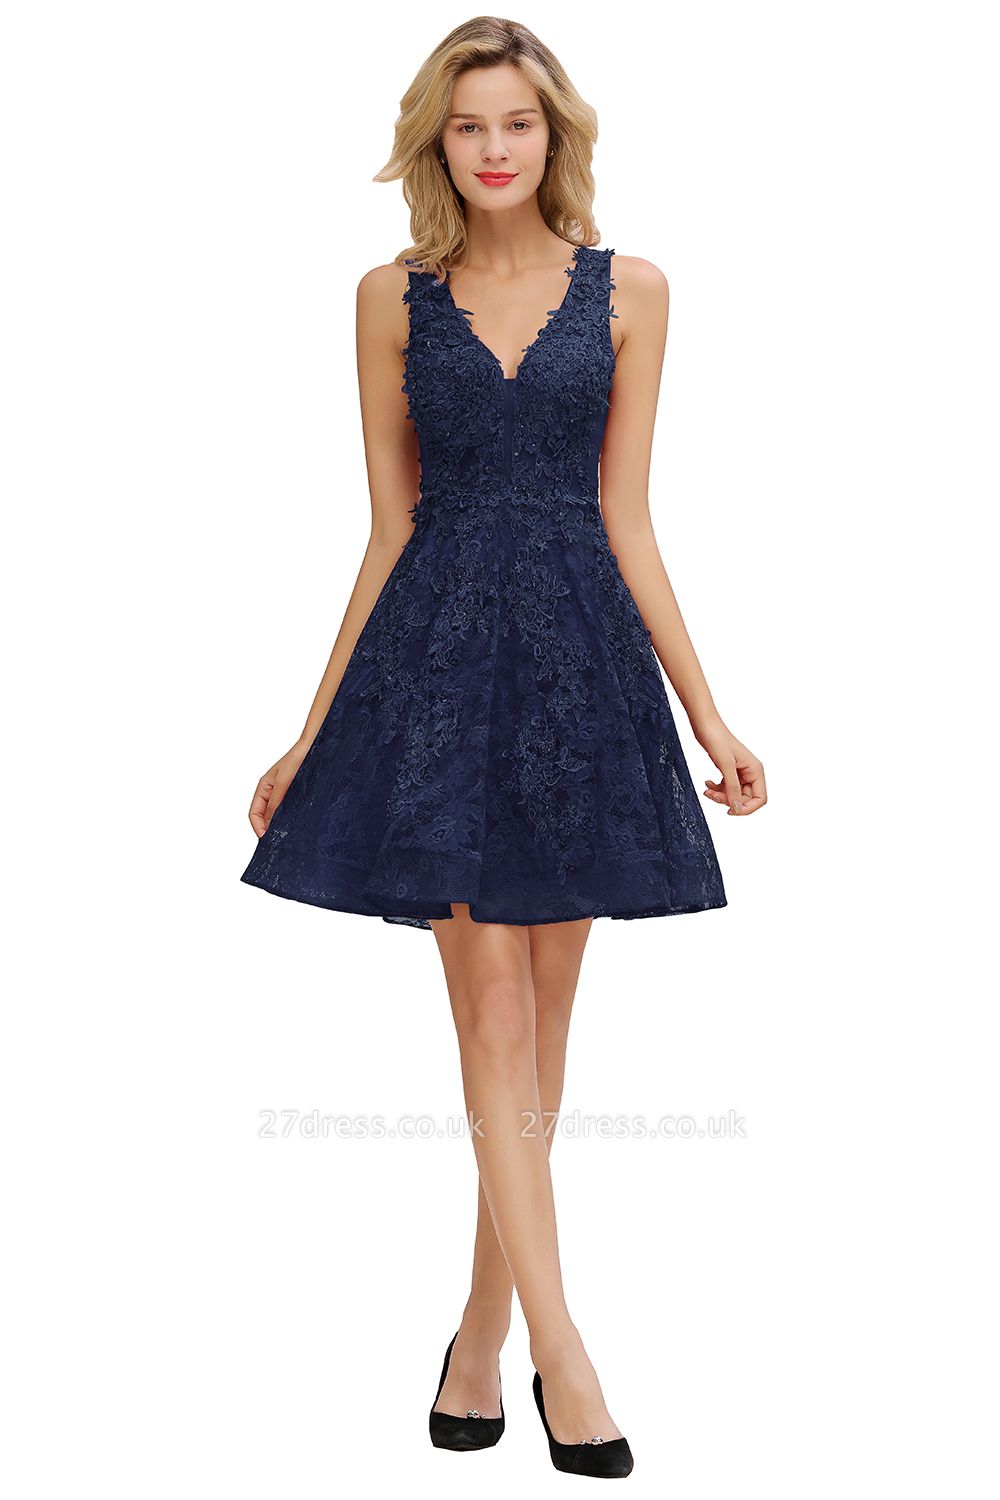 Knee Length Lace Appliques Homecoming Dresses | Burgundy Short Evening Dresses UK